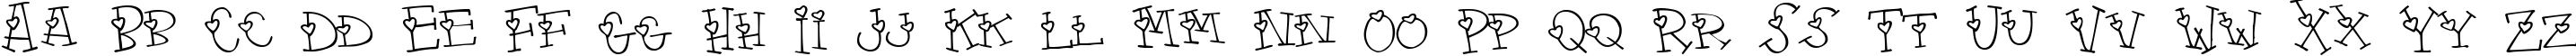 Пример написания английского алфавита шрифтом 4 my lover